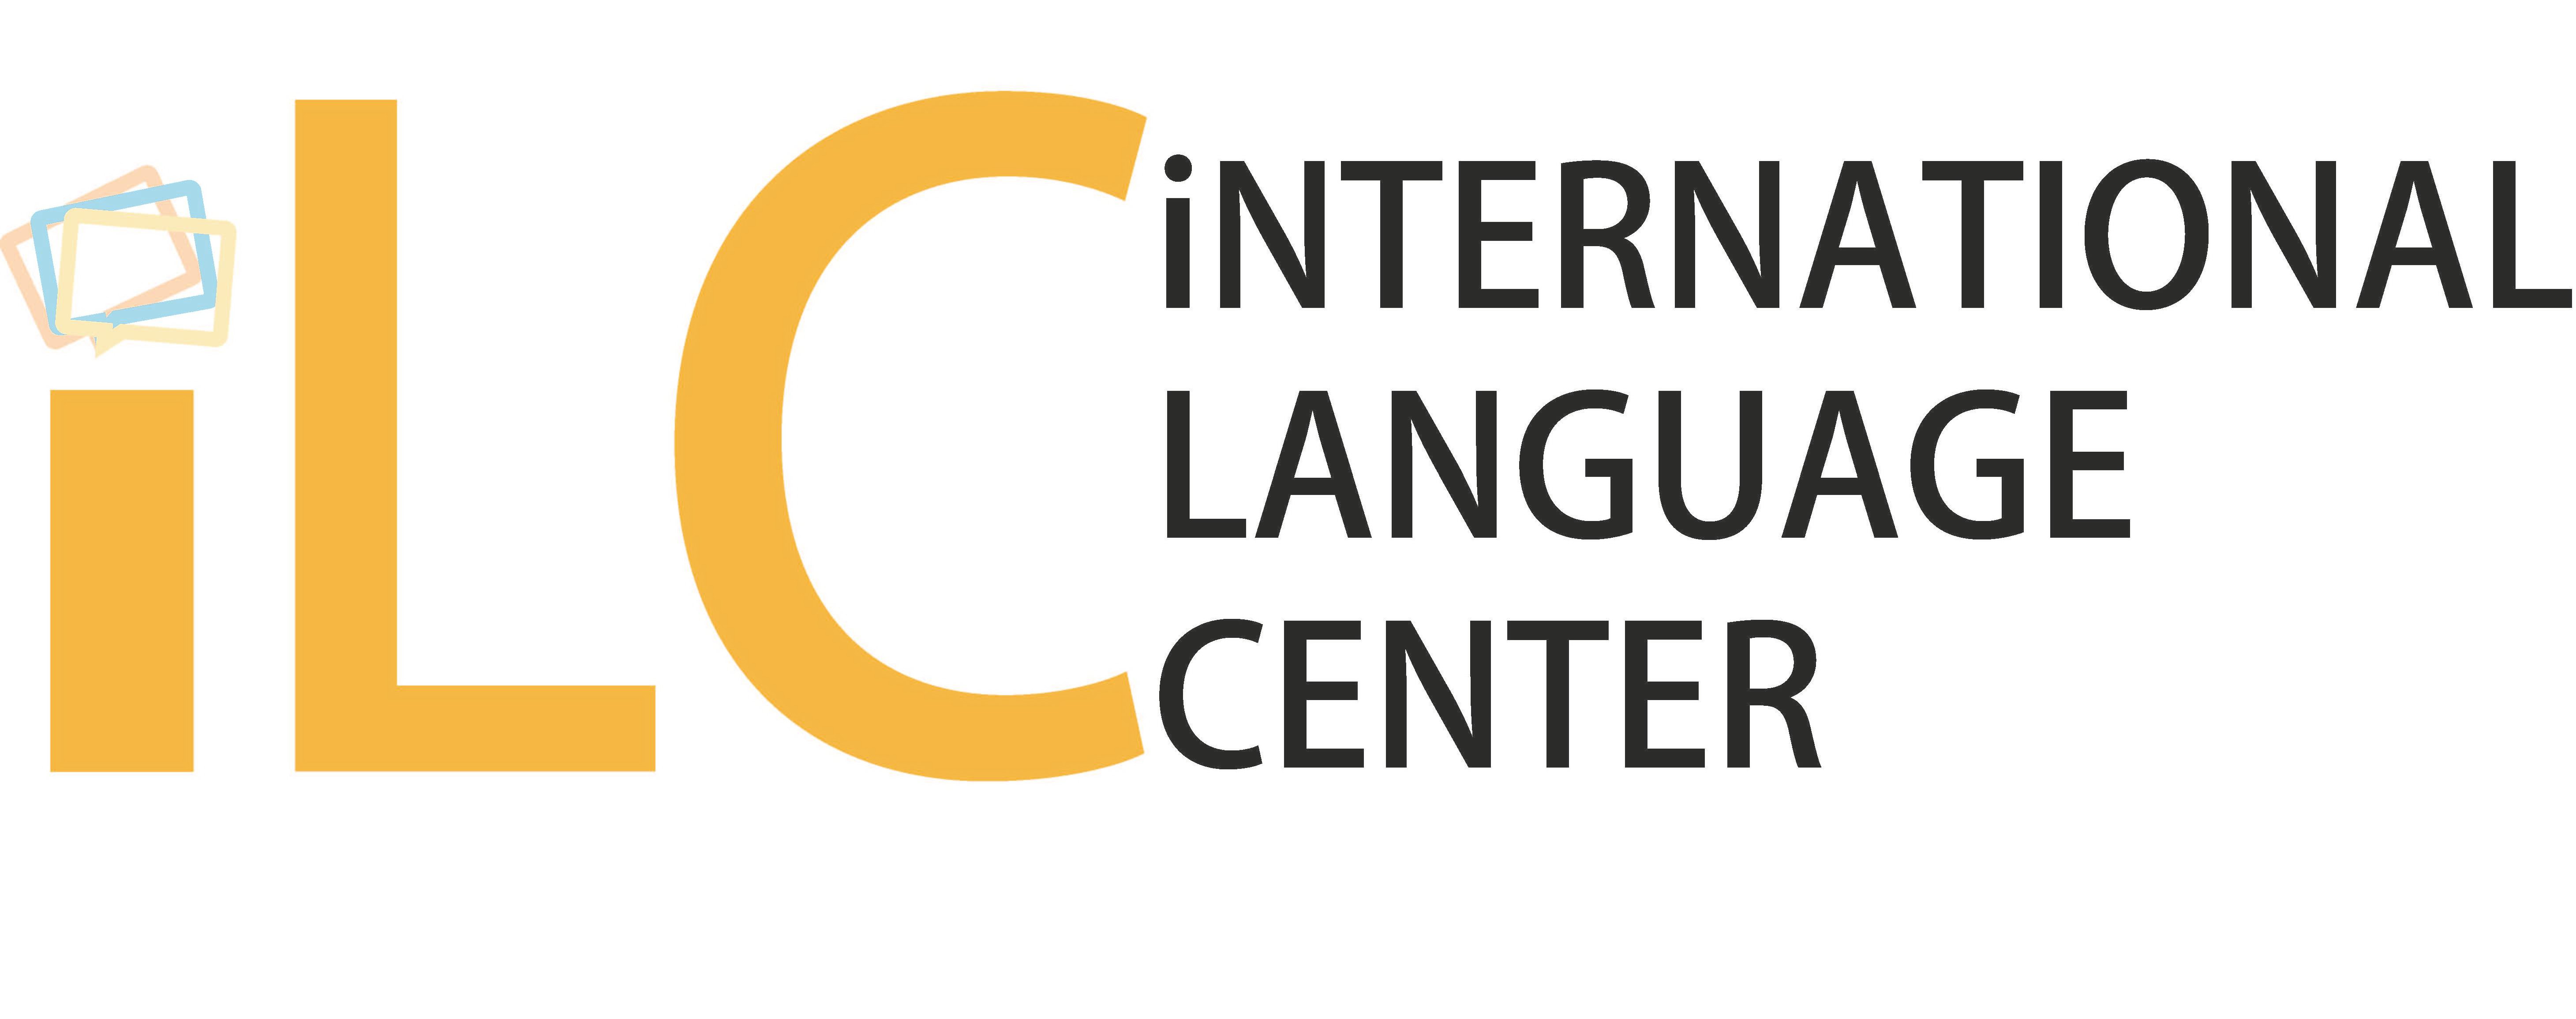  ILC INTERNATIONAL LANGUAGE CENTER